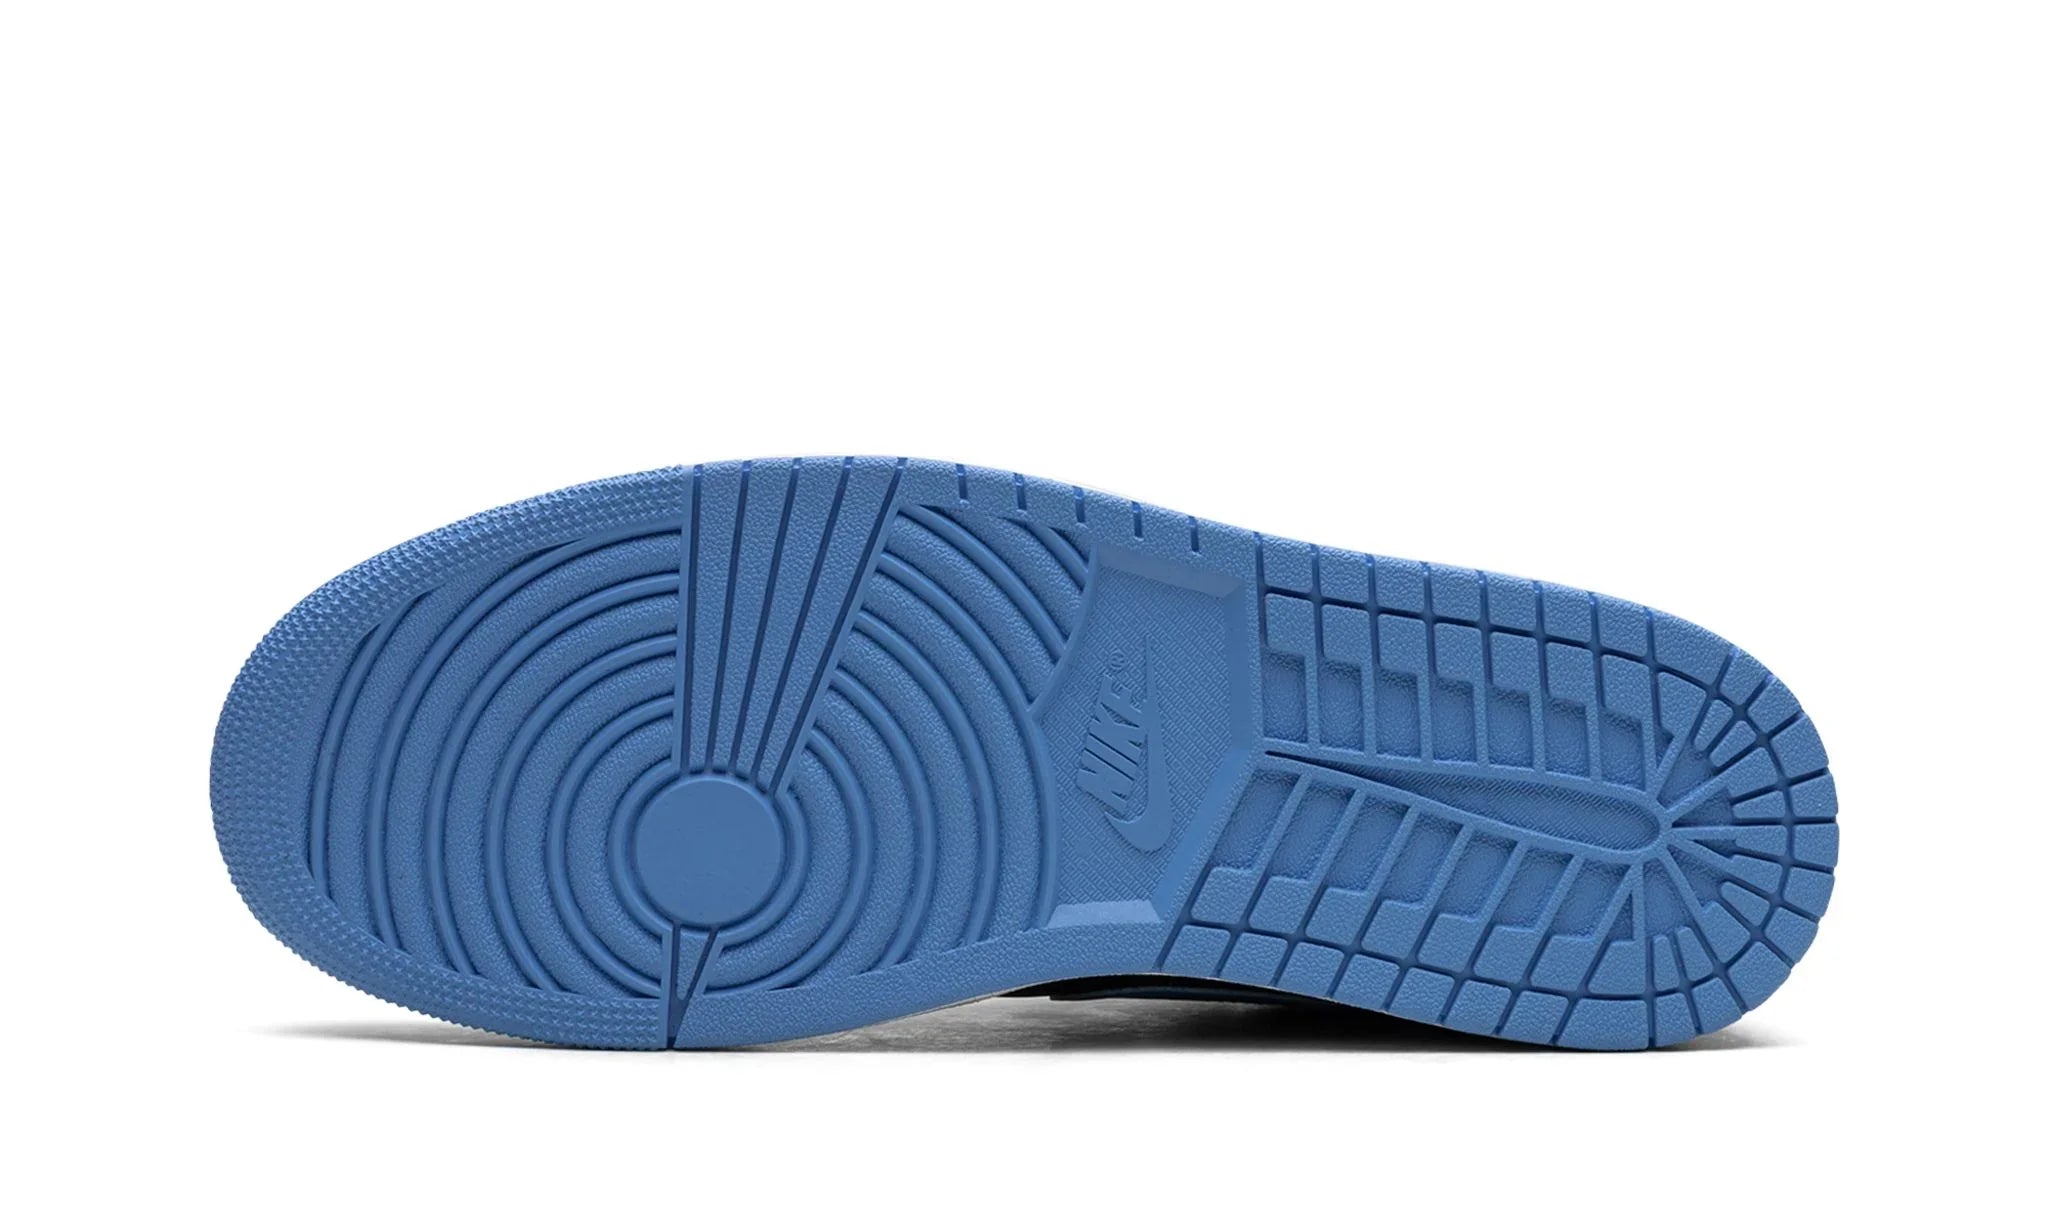 Jordan 1 Low "University Blue" - 553558-041 - Sneakers